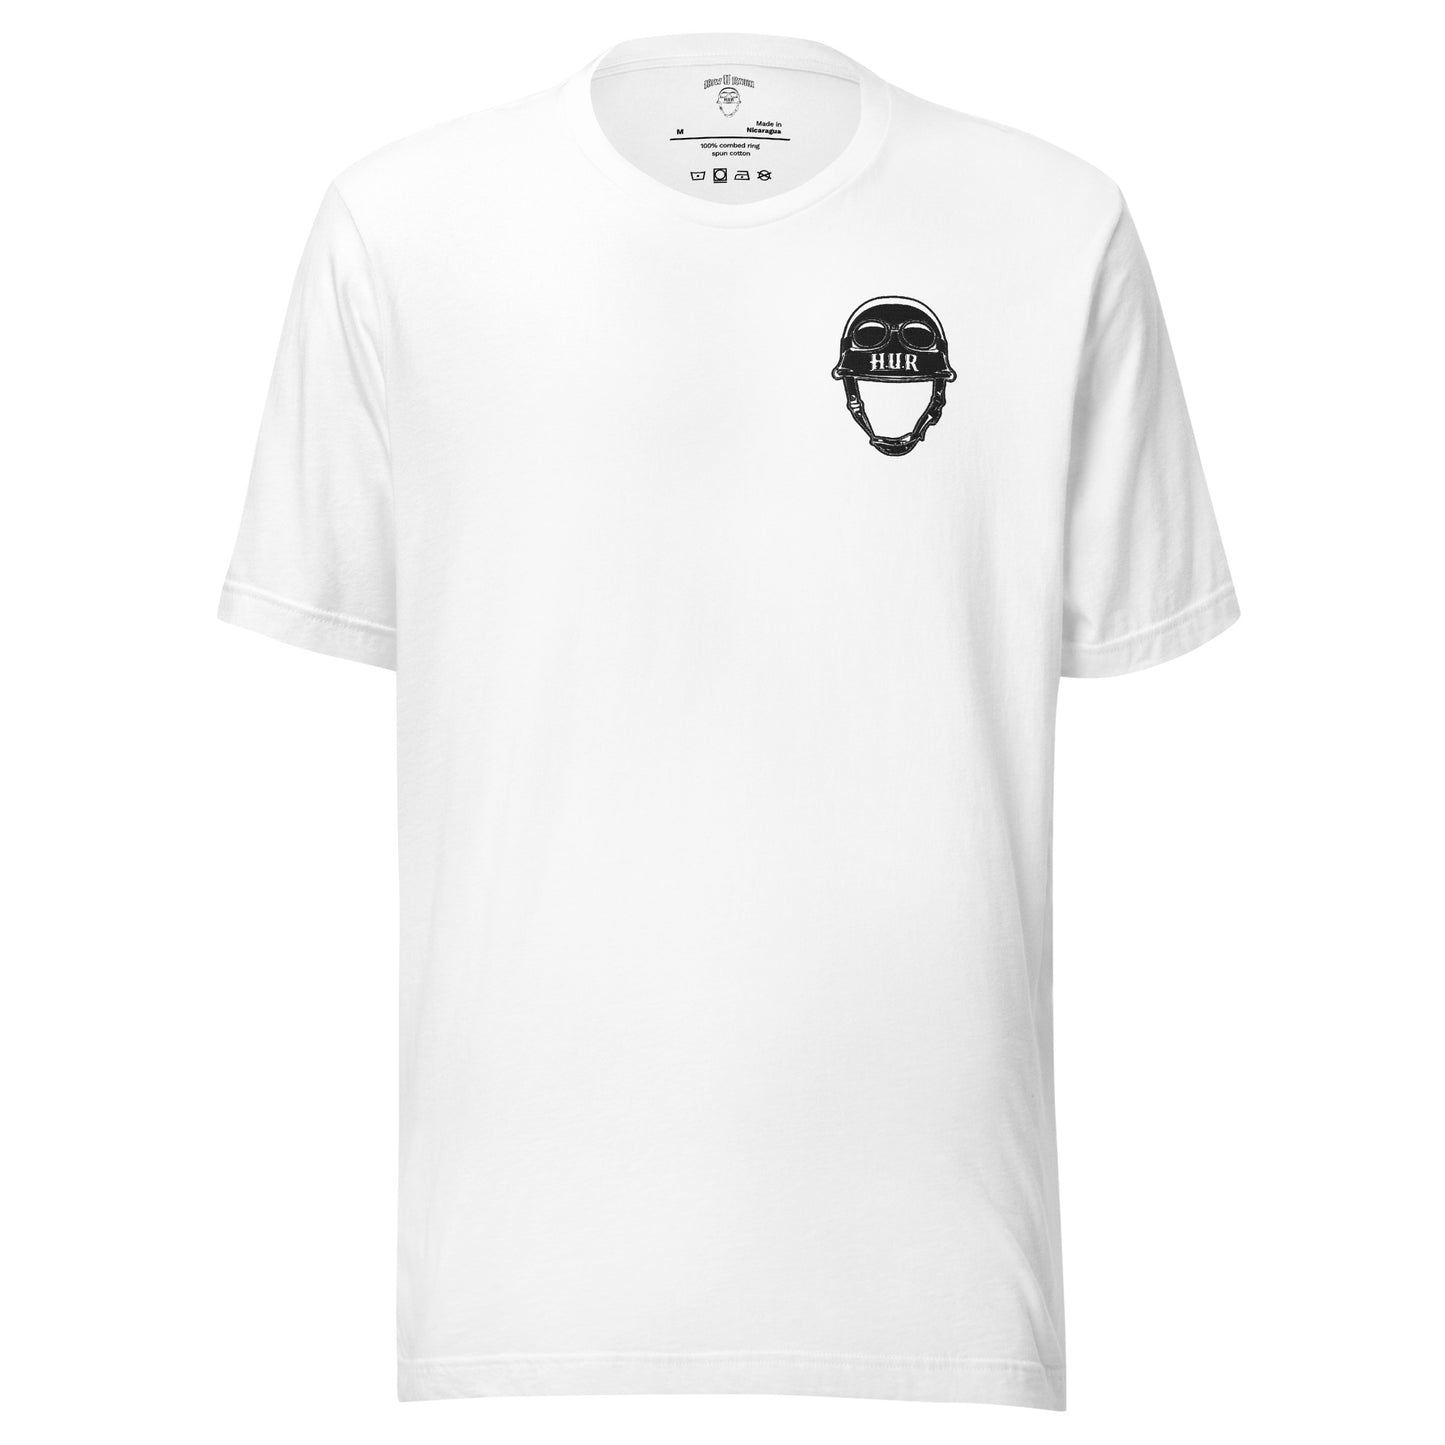 White Unisex t-shirt